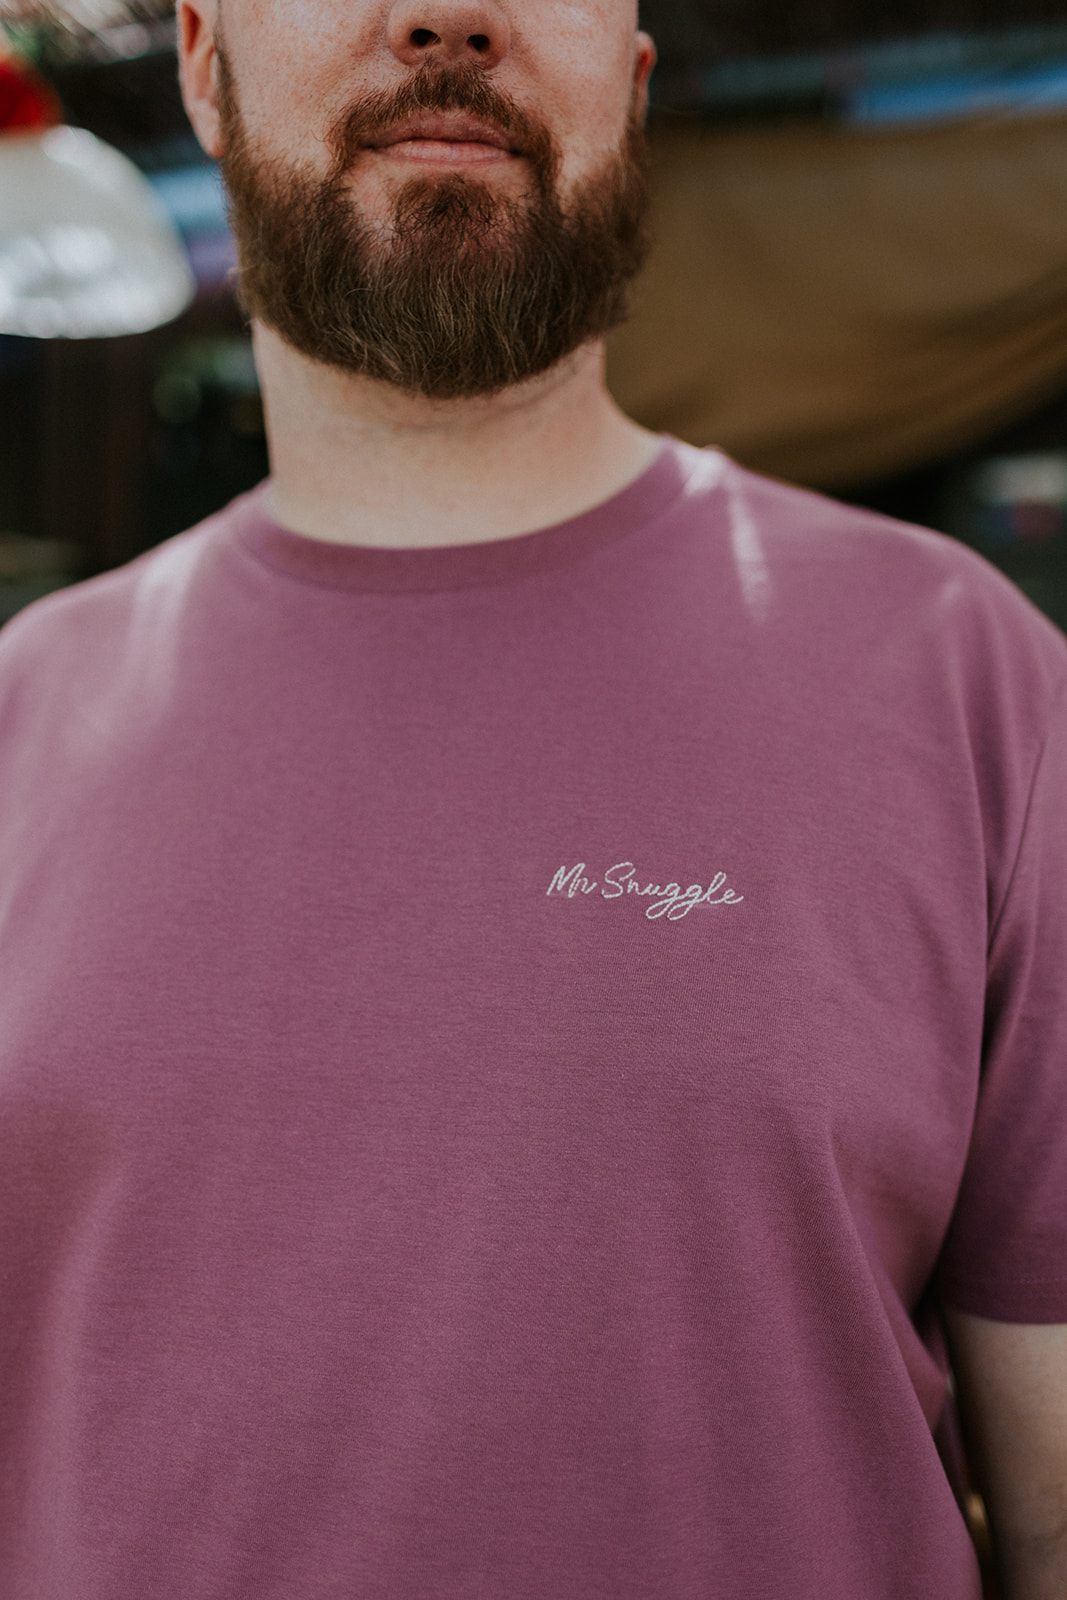 Mr Suggle - T-shirt - Mangos on Monday